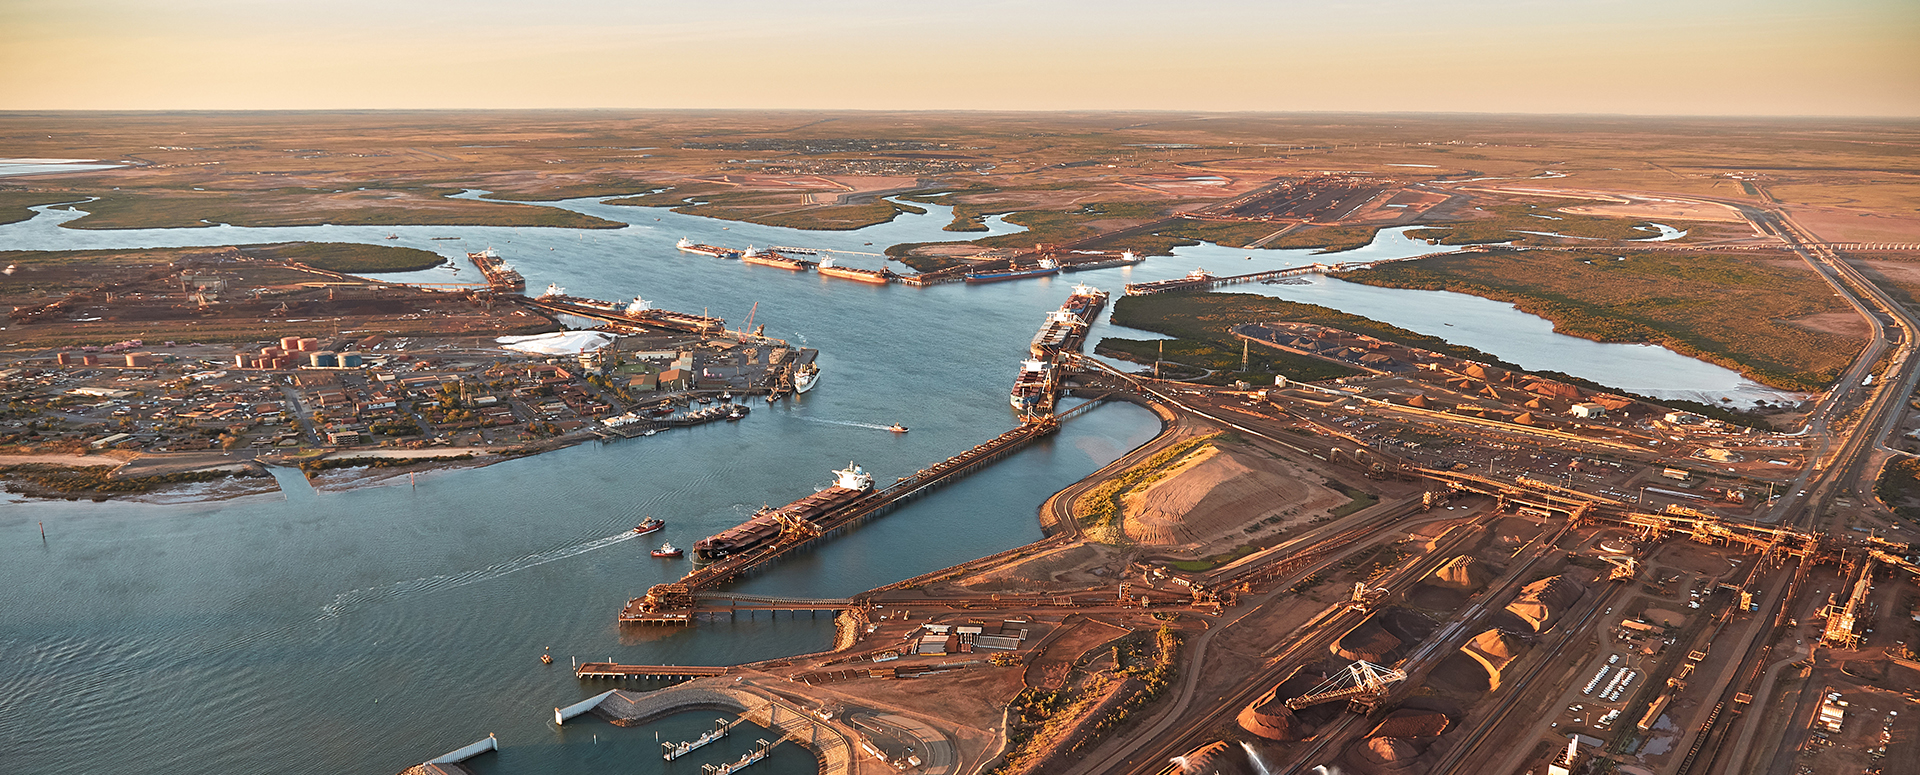 Aerial image of the Port of Port Hedland